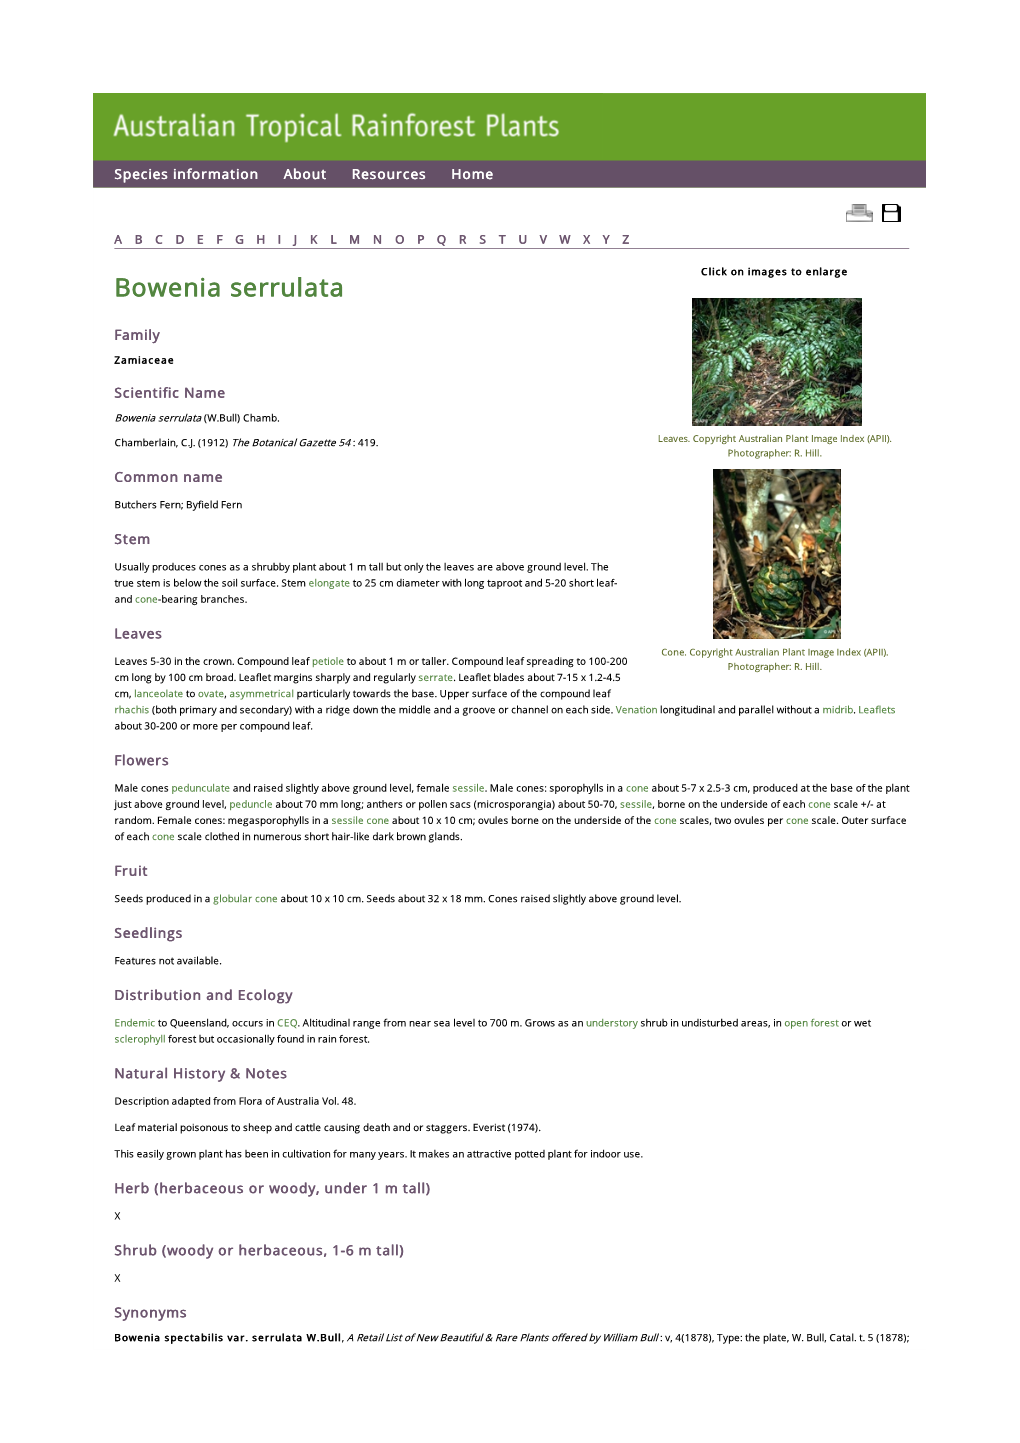 Bowenia Serrulata Click on Images to Enlarge